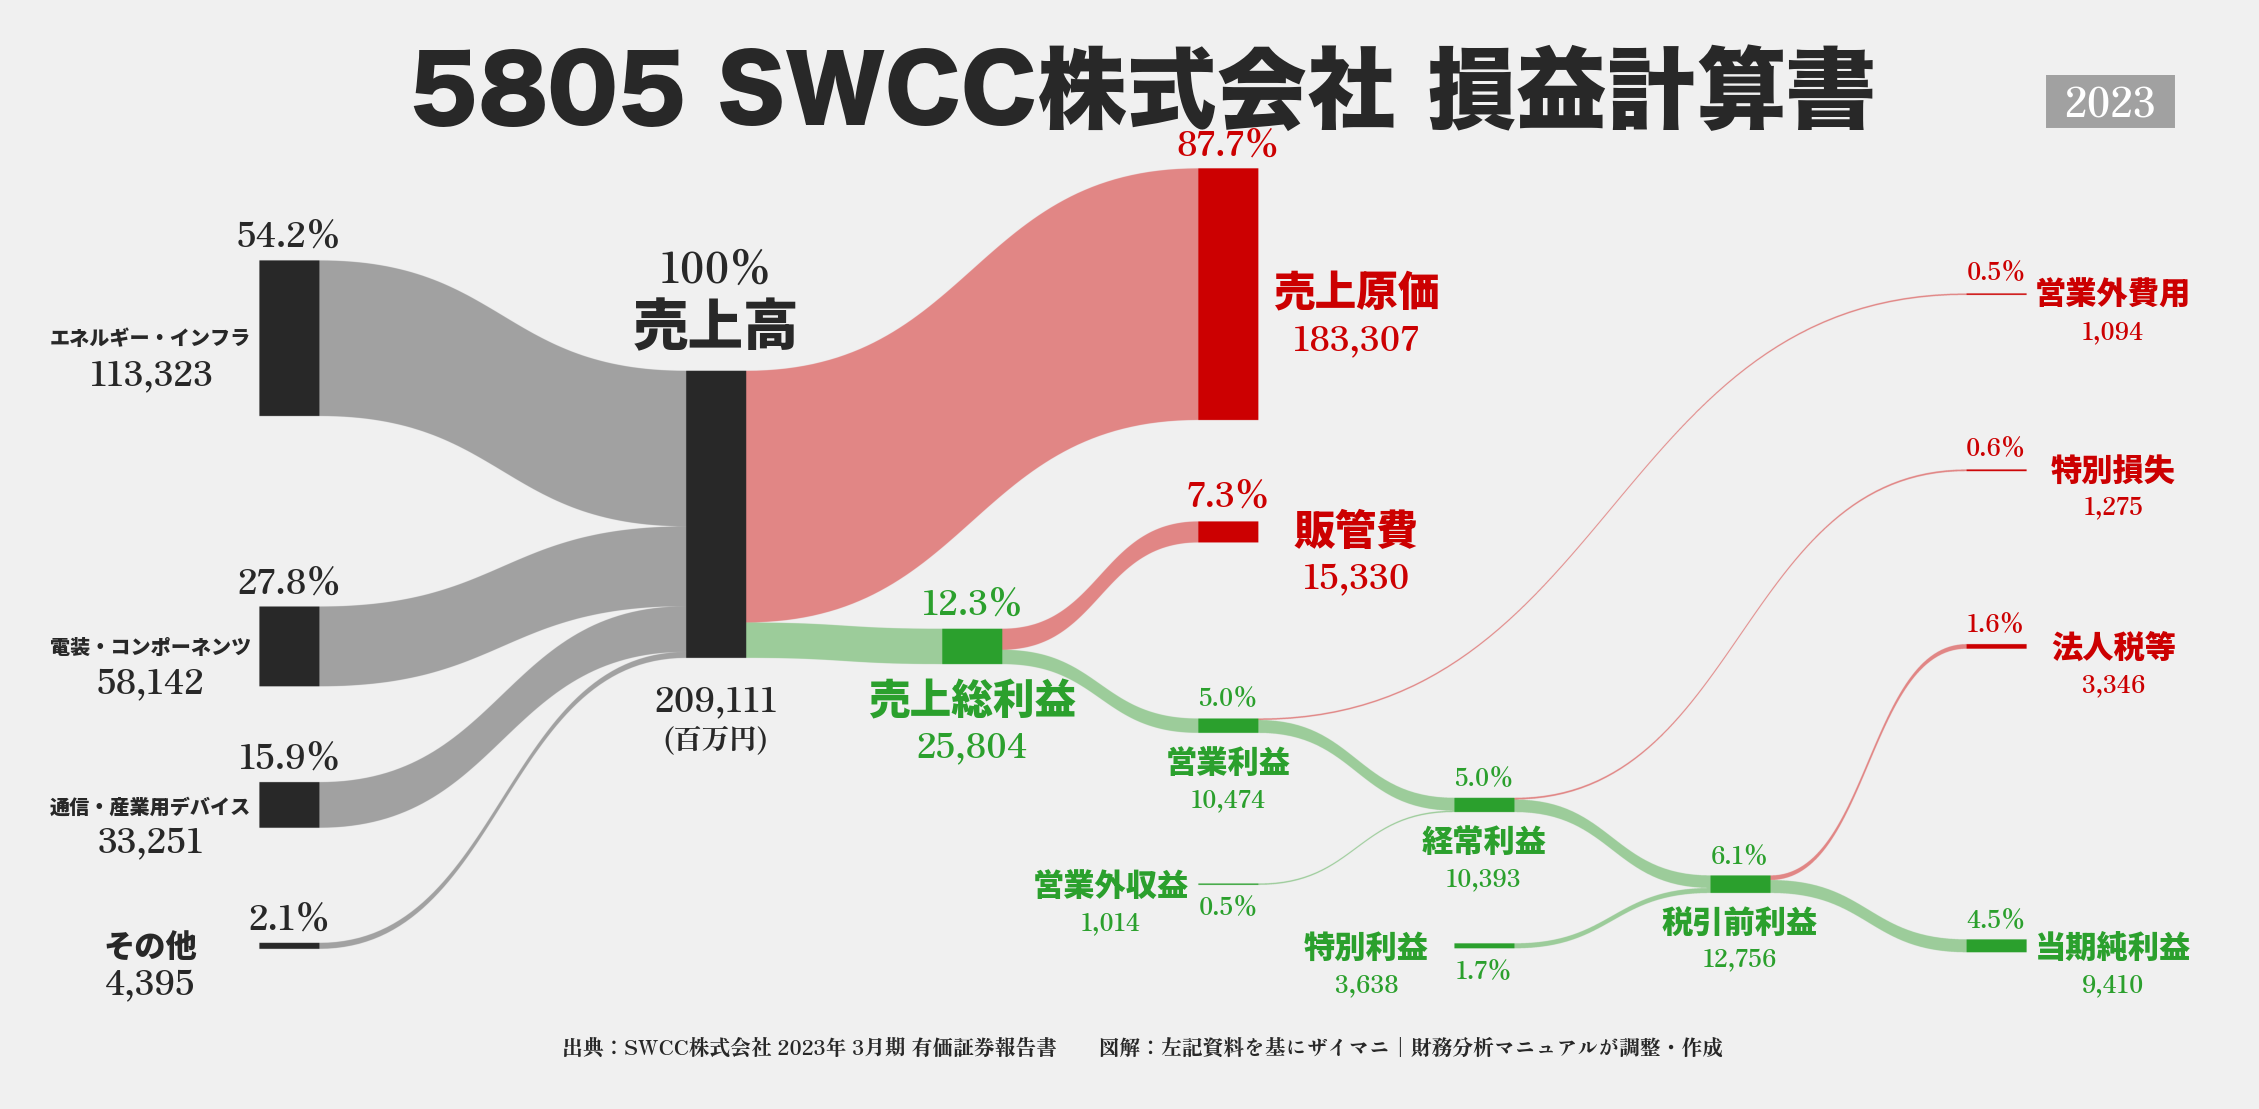 SWCC｜5805の損益計算書サンキーダイアグラム図解資料